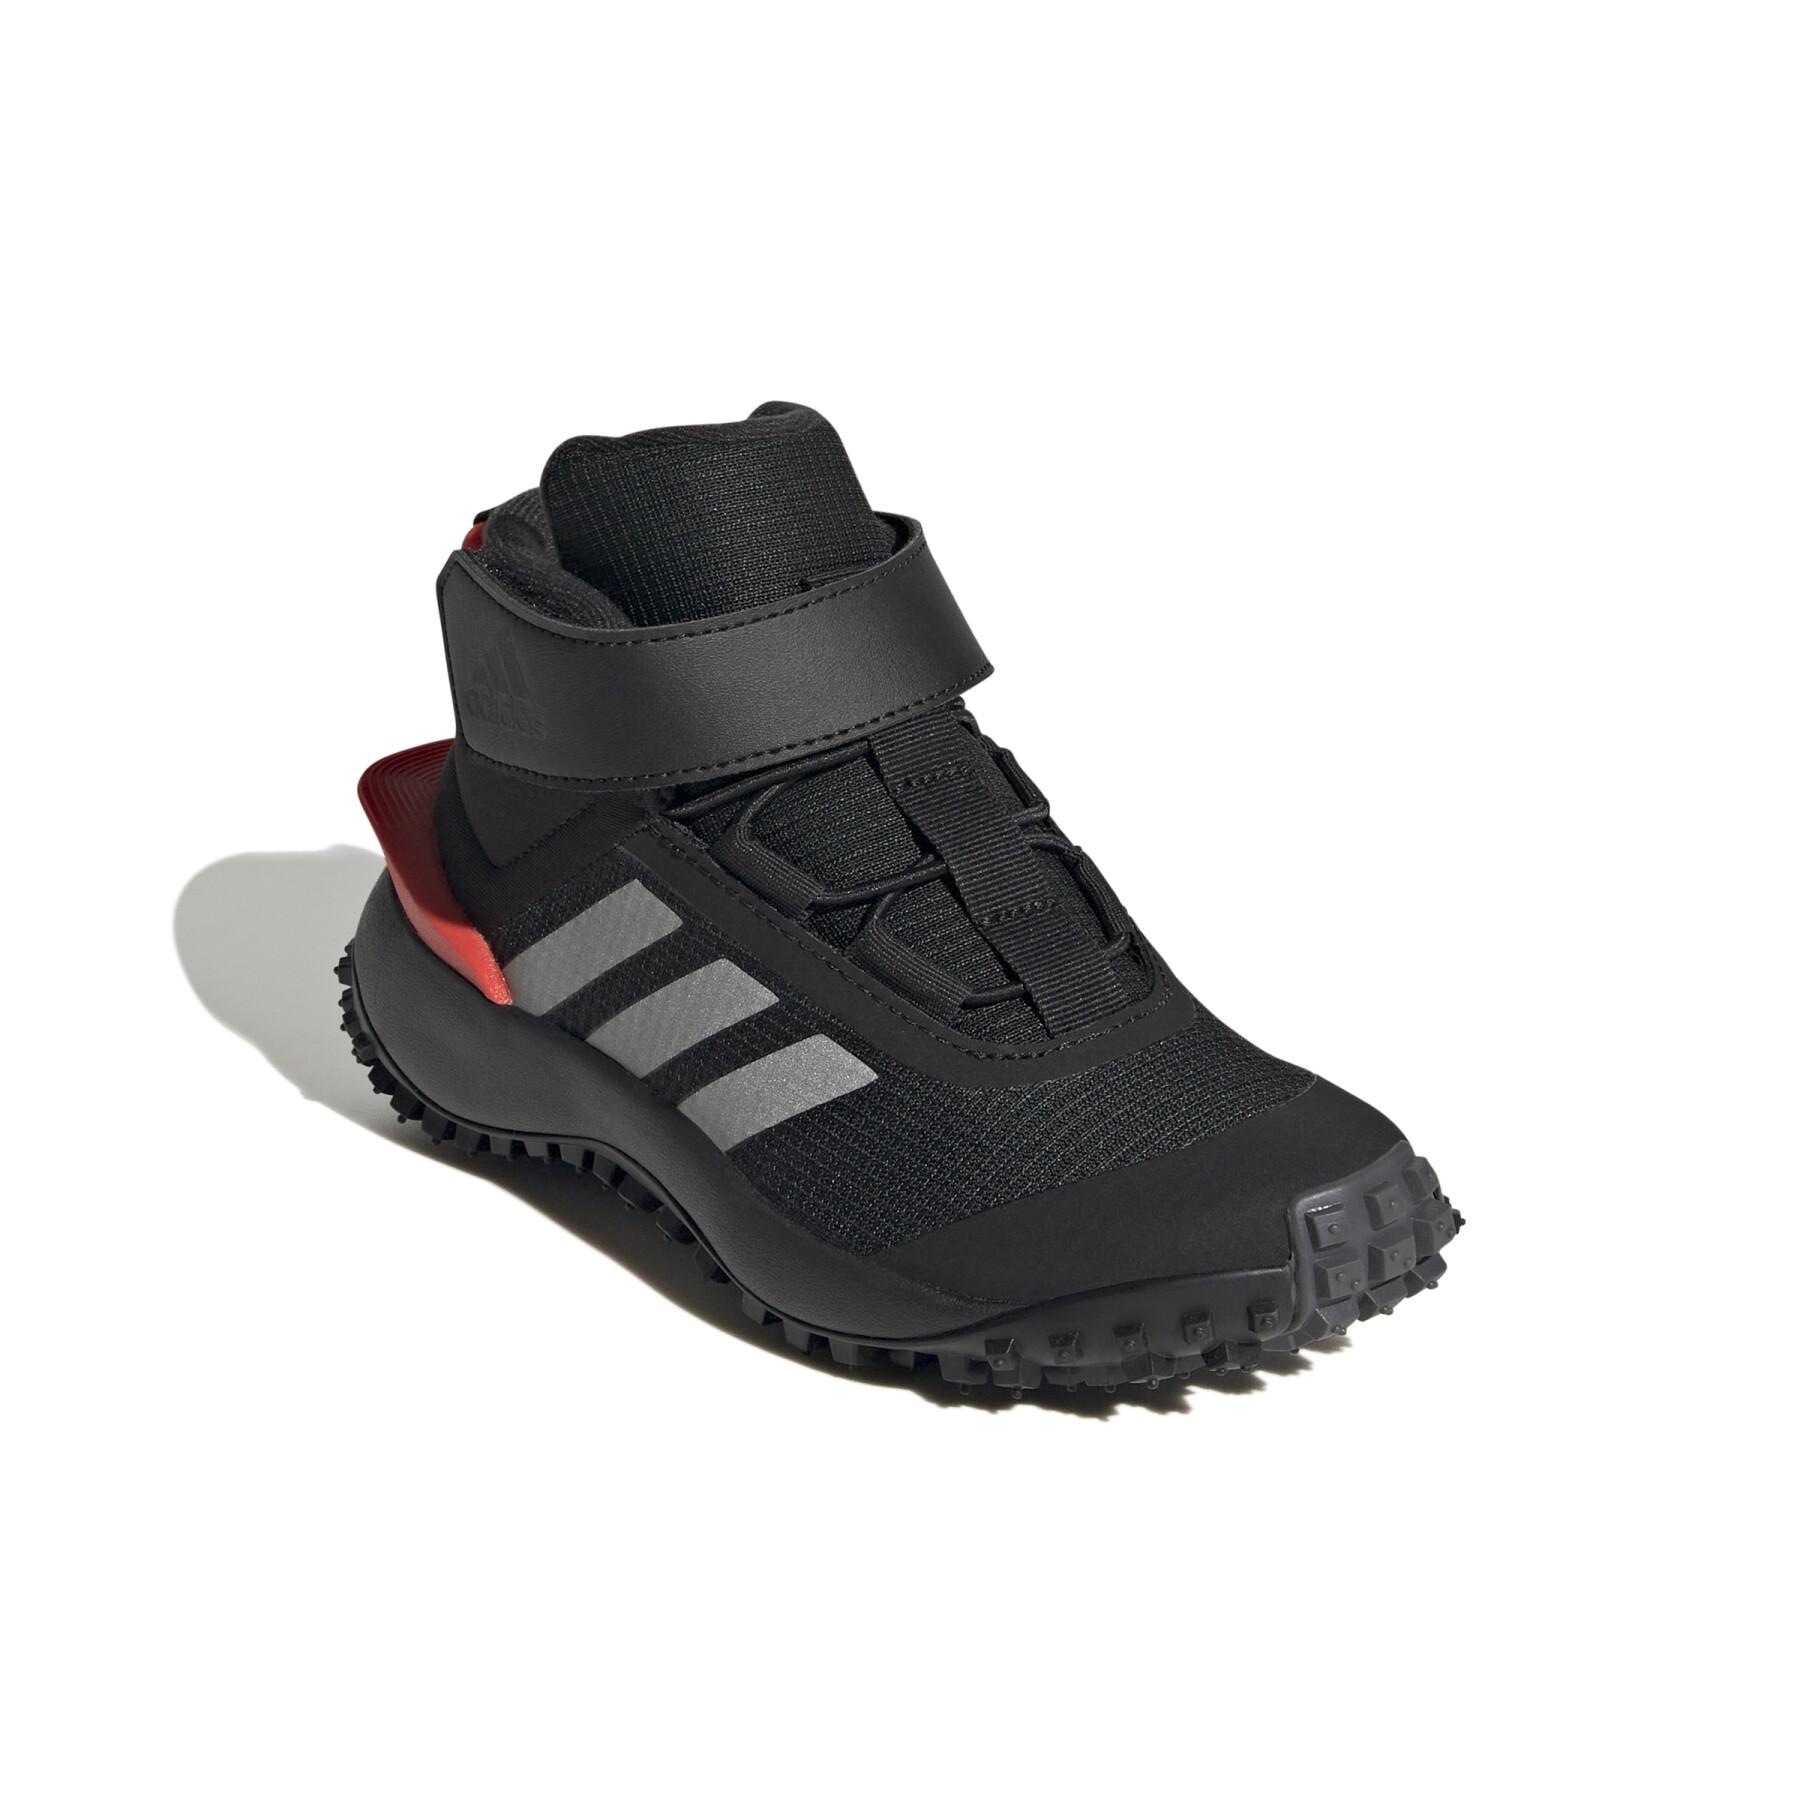 Chaussures de trail enfant adidas Fortatrail